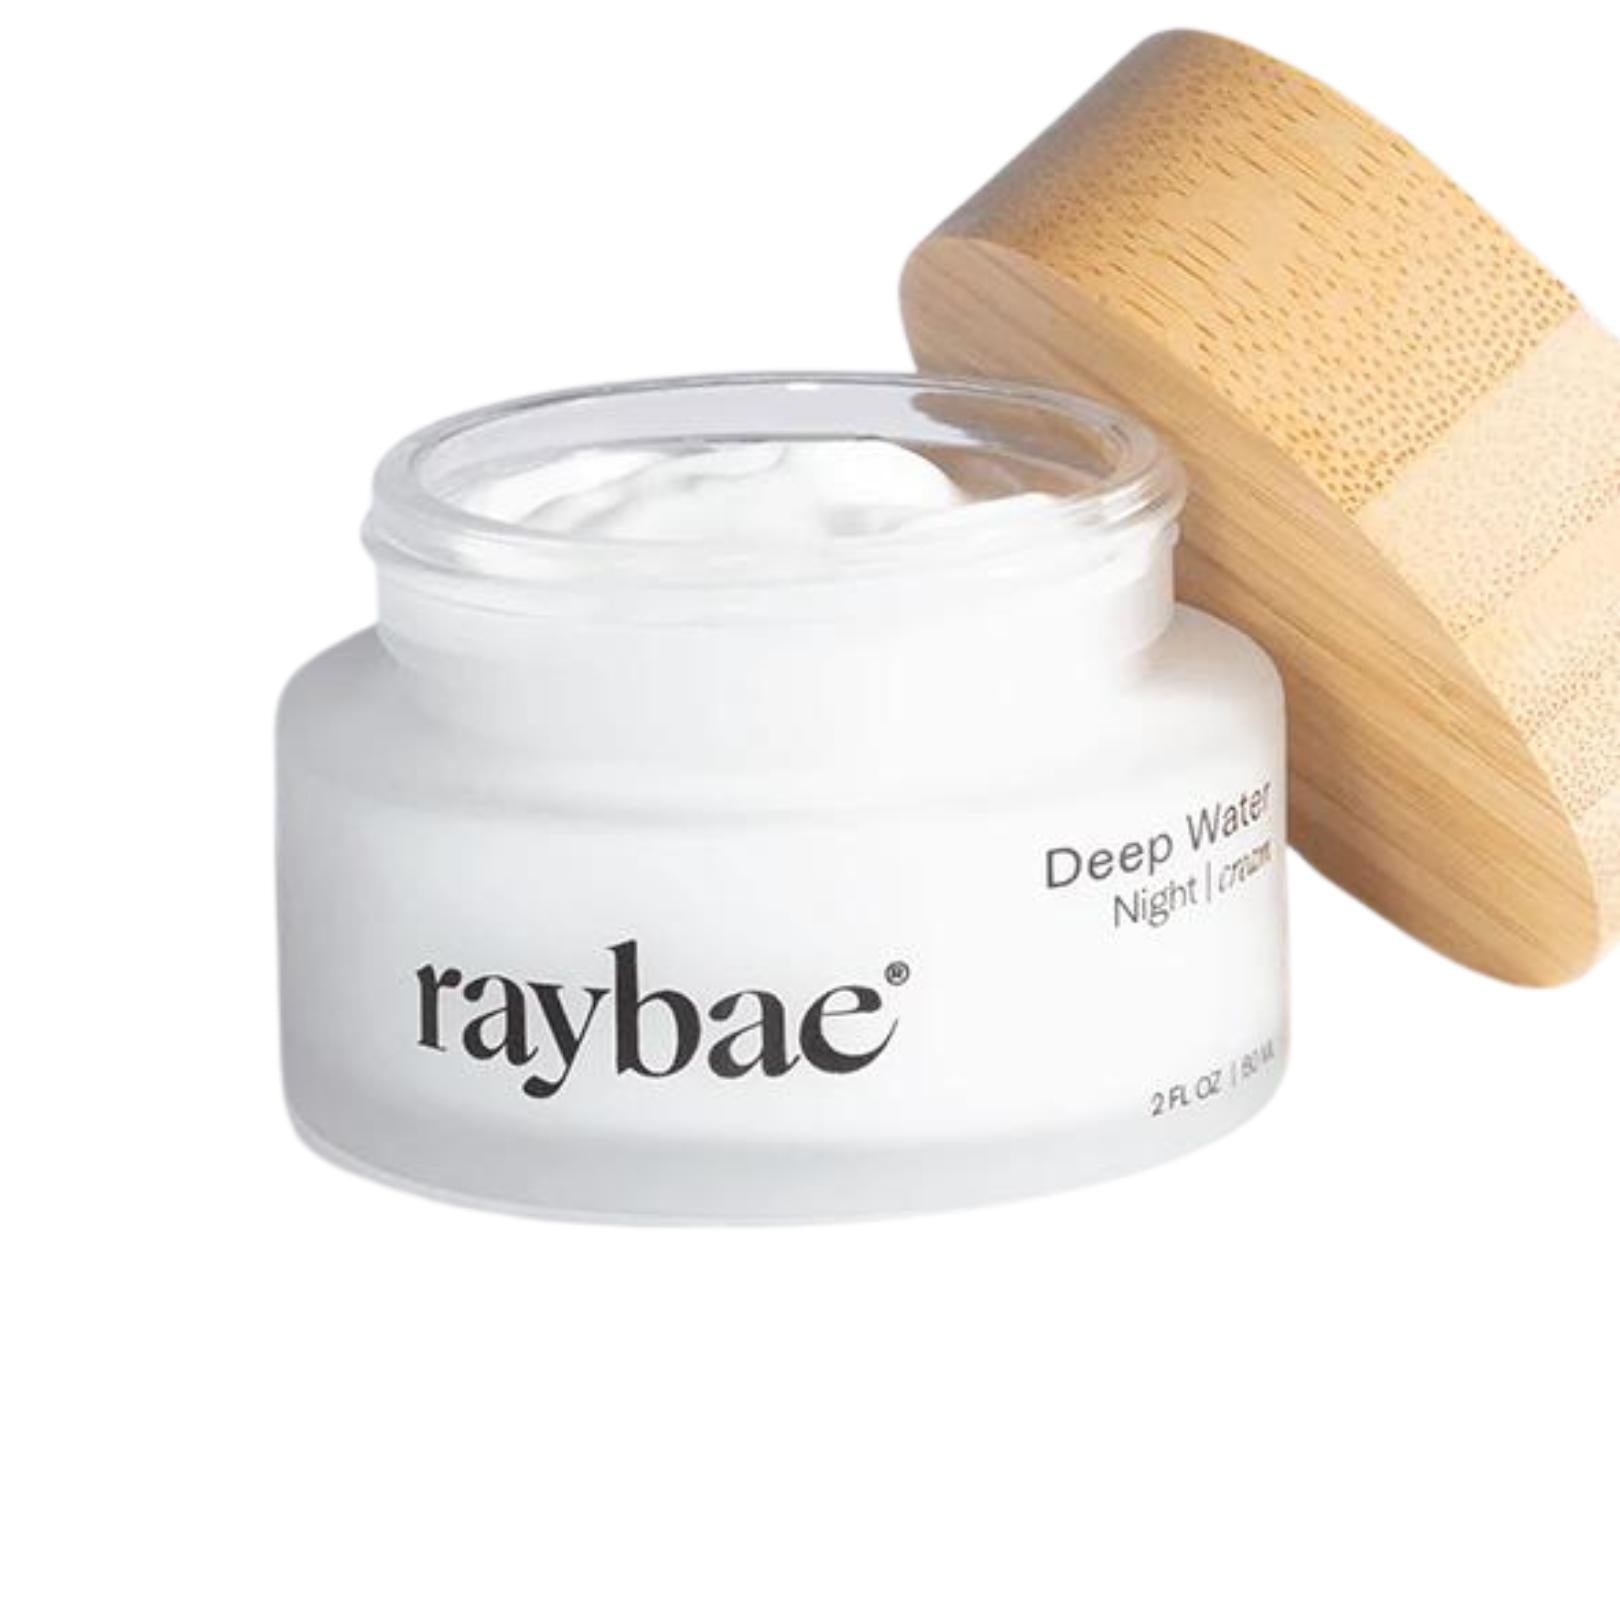 Raybae Deep Water Night Cream